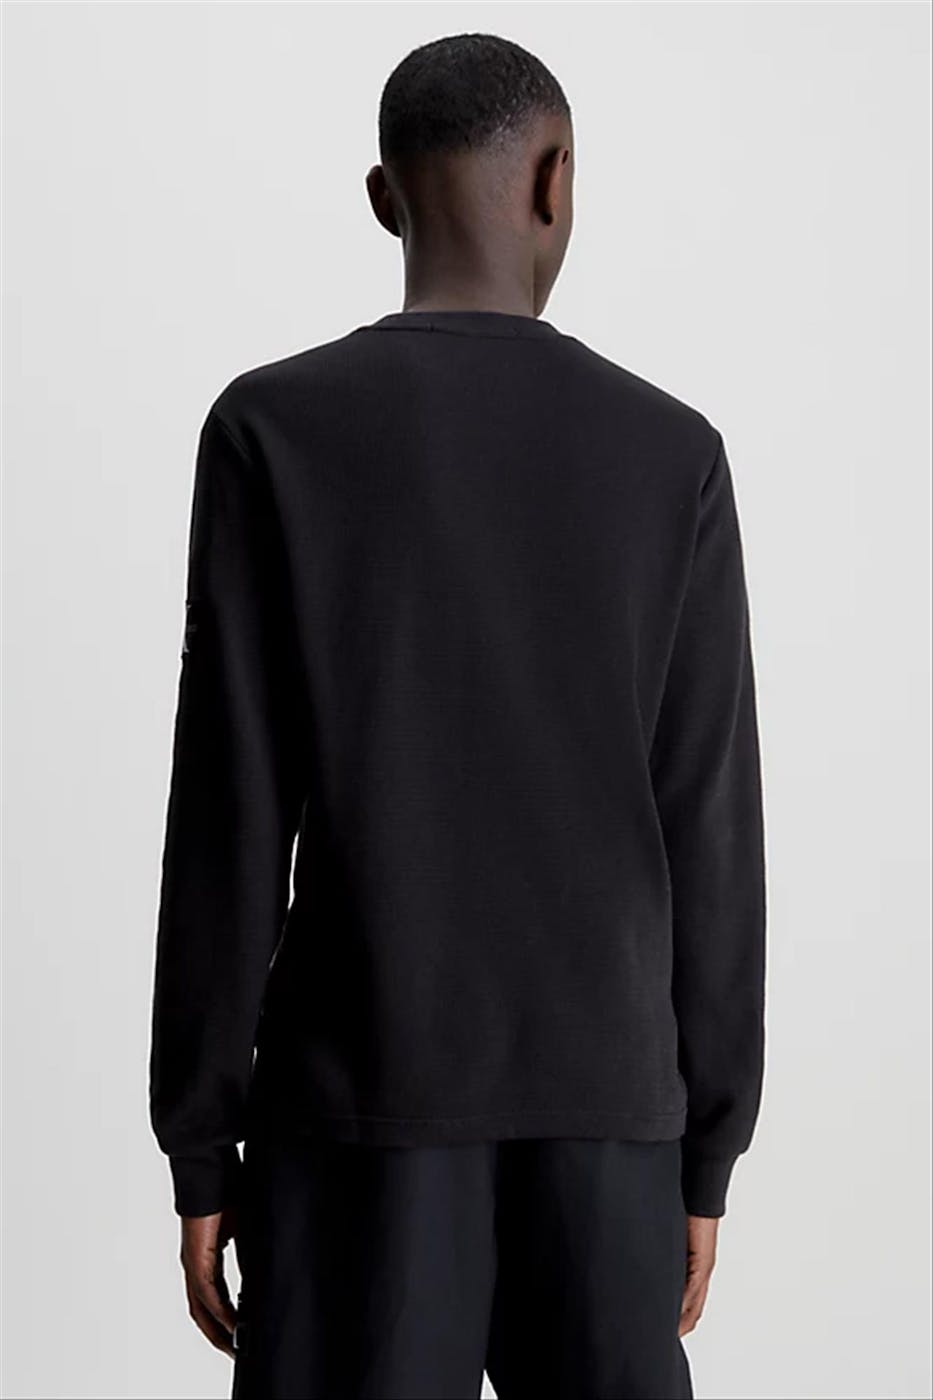 Calvin Klein Jeans - Zwarte Logo Badge lange mouw T-shirt